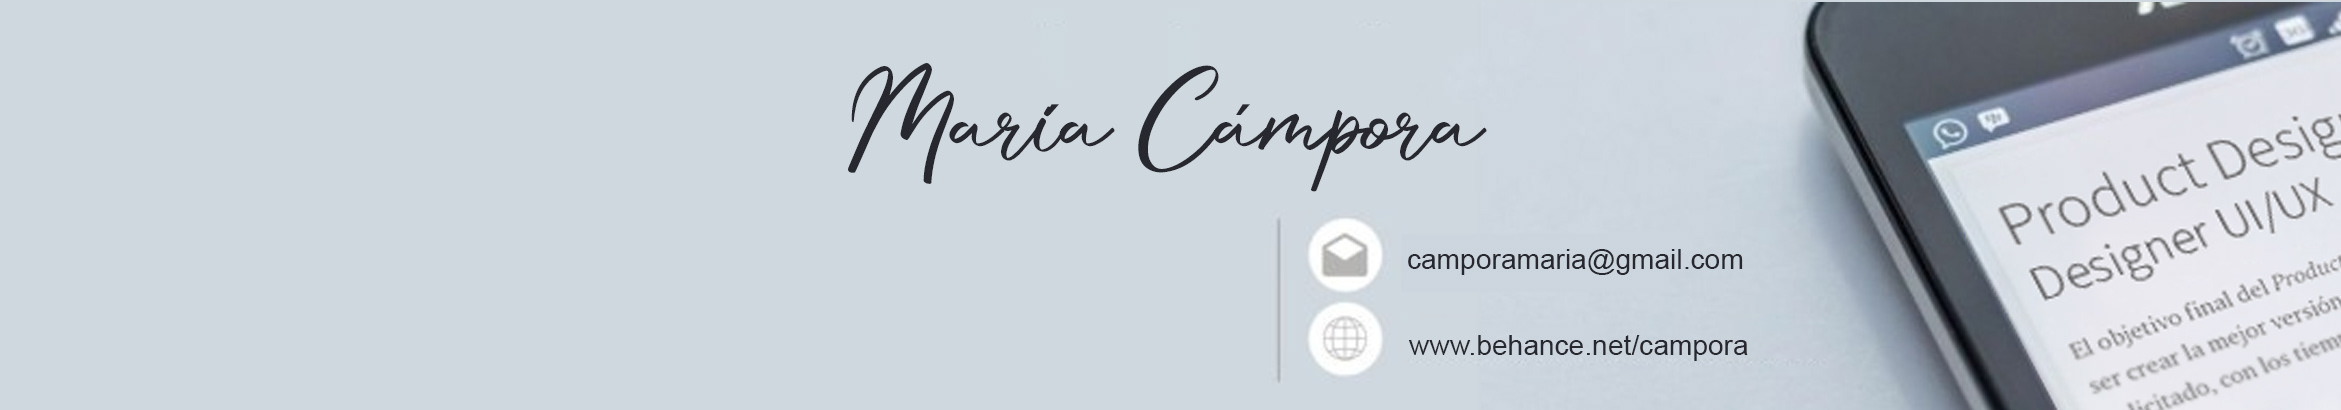 maria campora profil başlığı